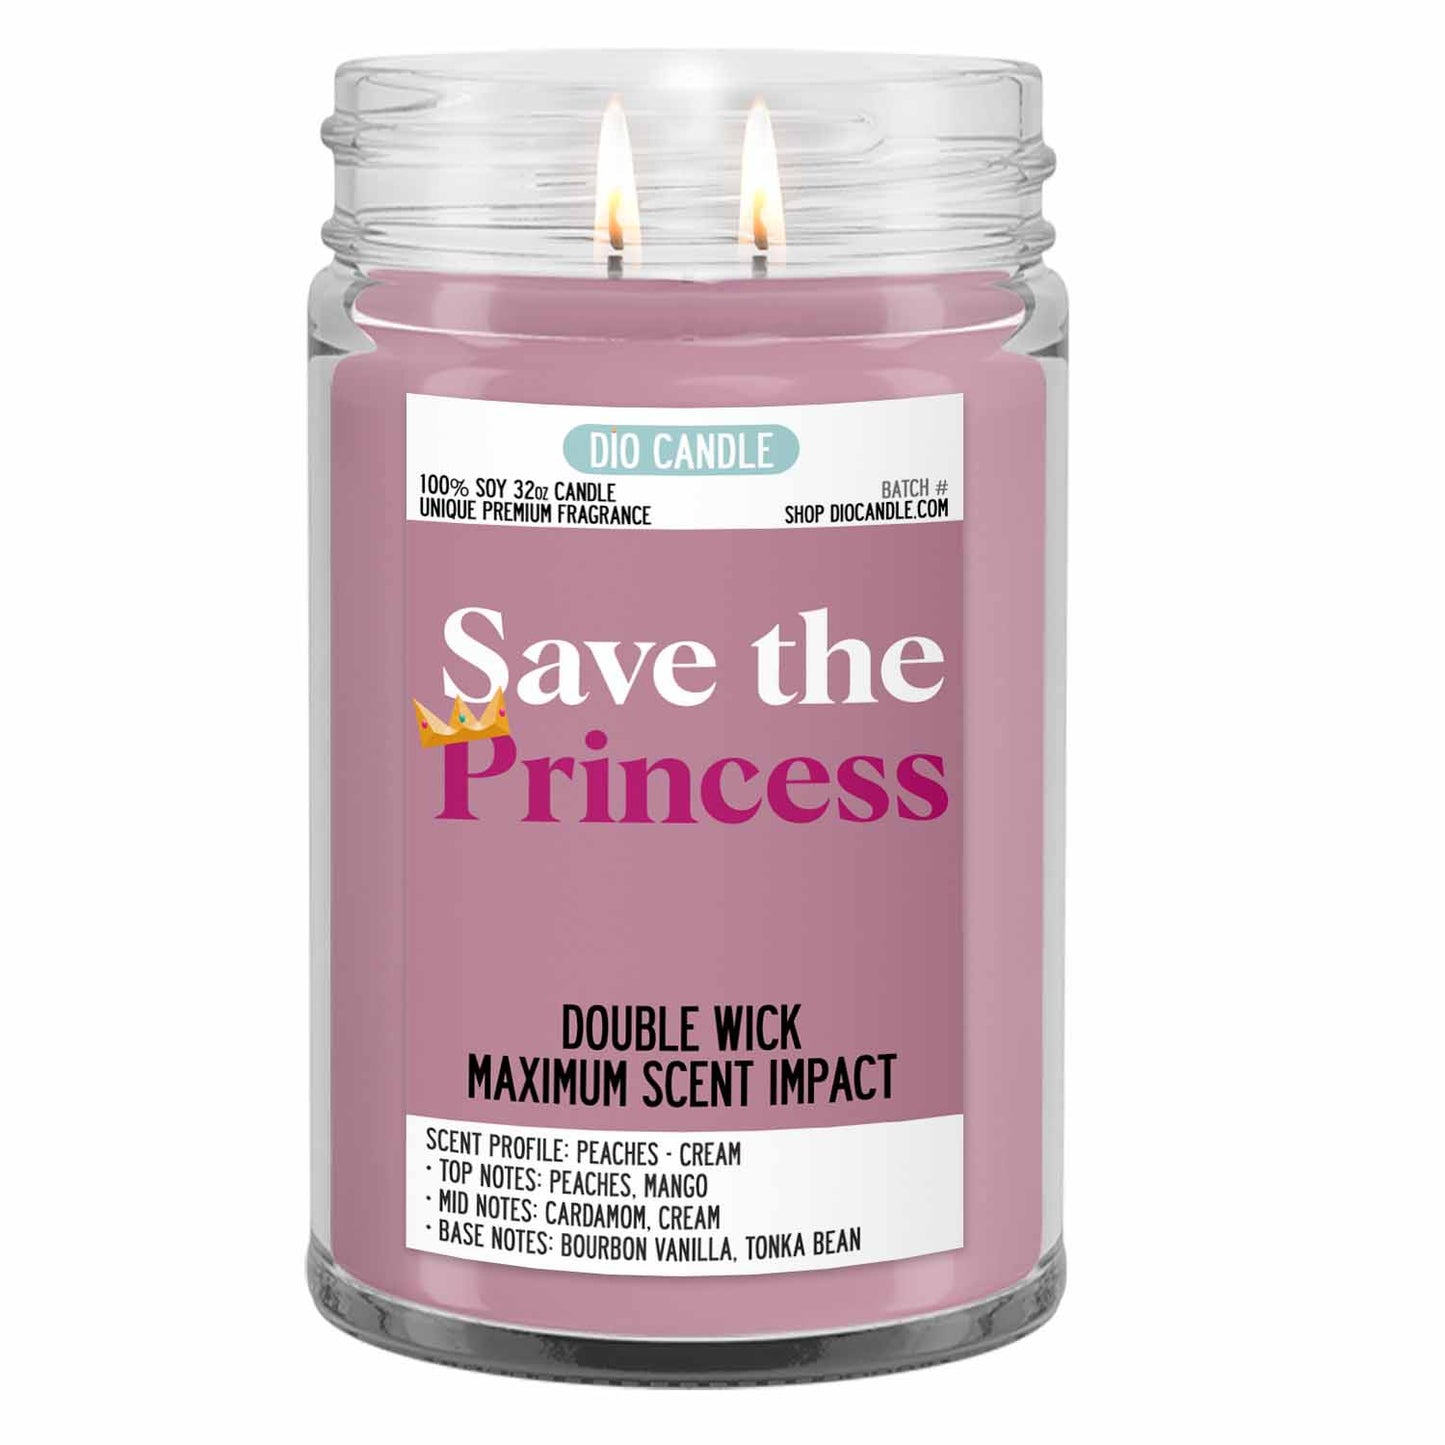 Save the Princess Candle